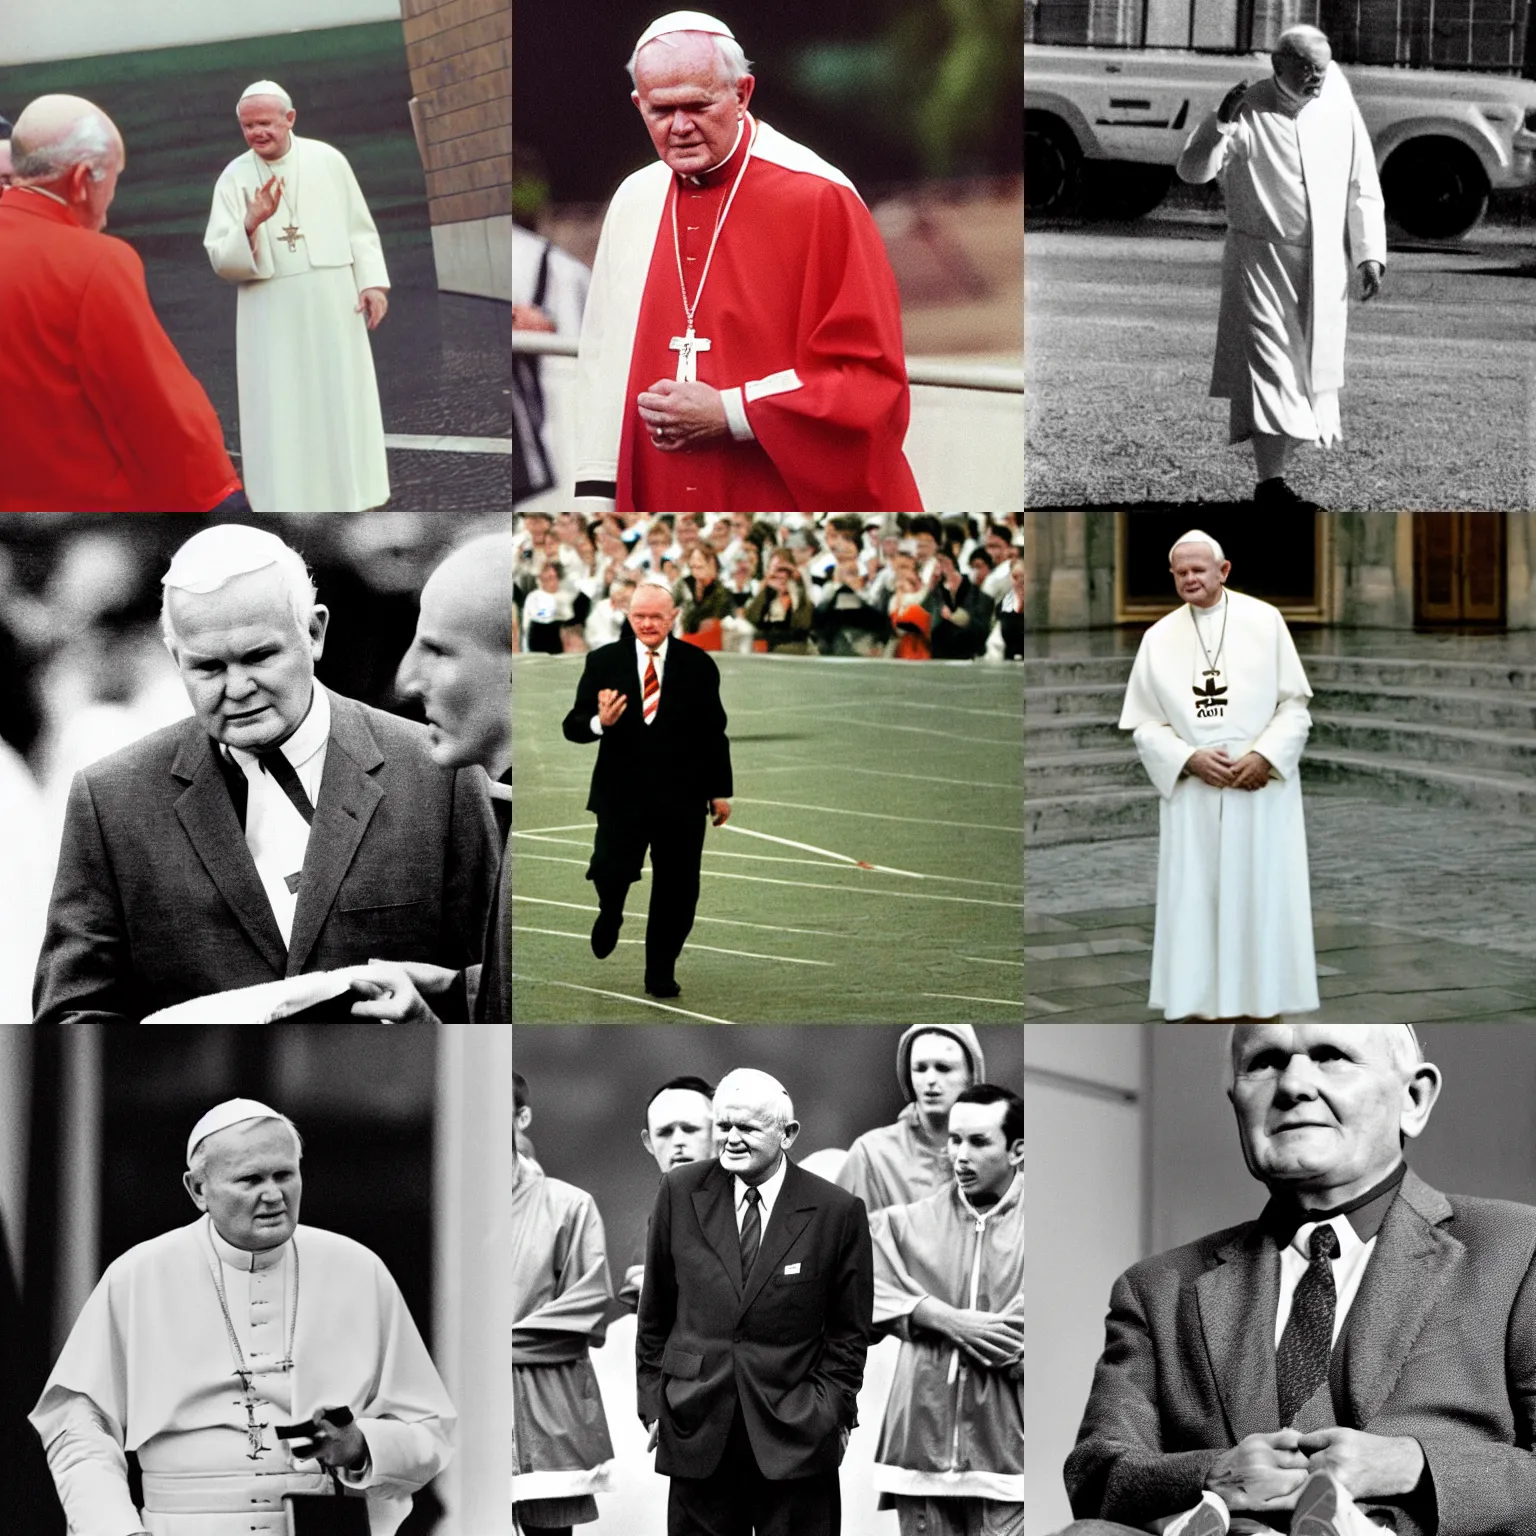 Prompt: John Paul II in Adidas suit